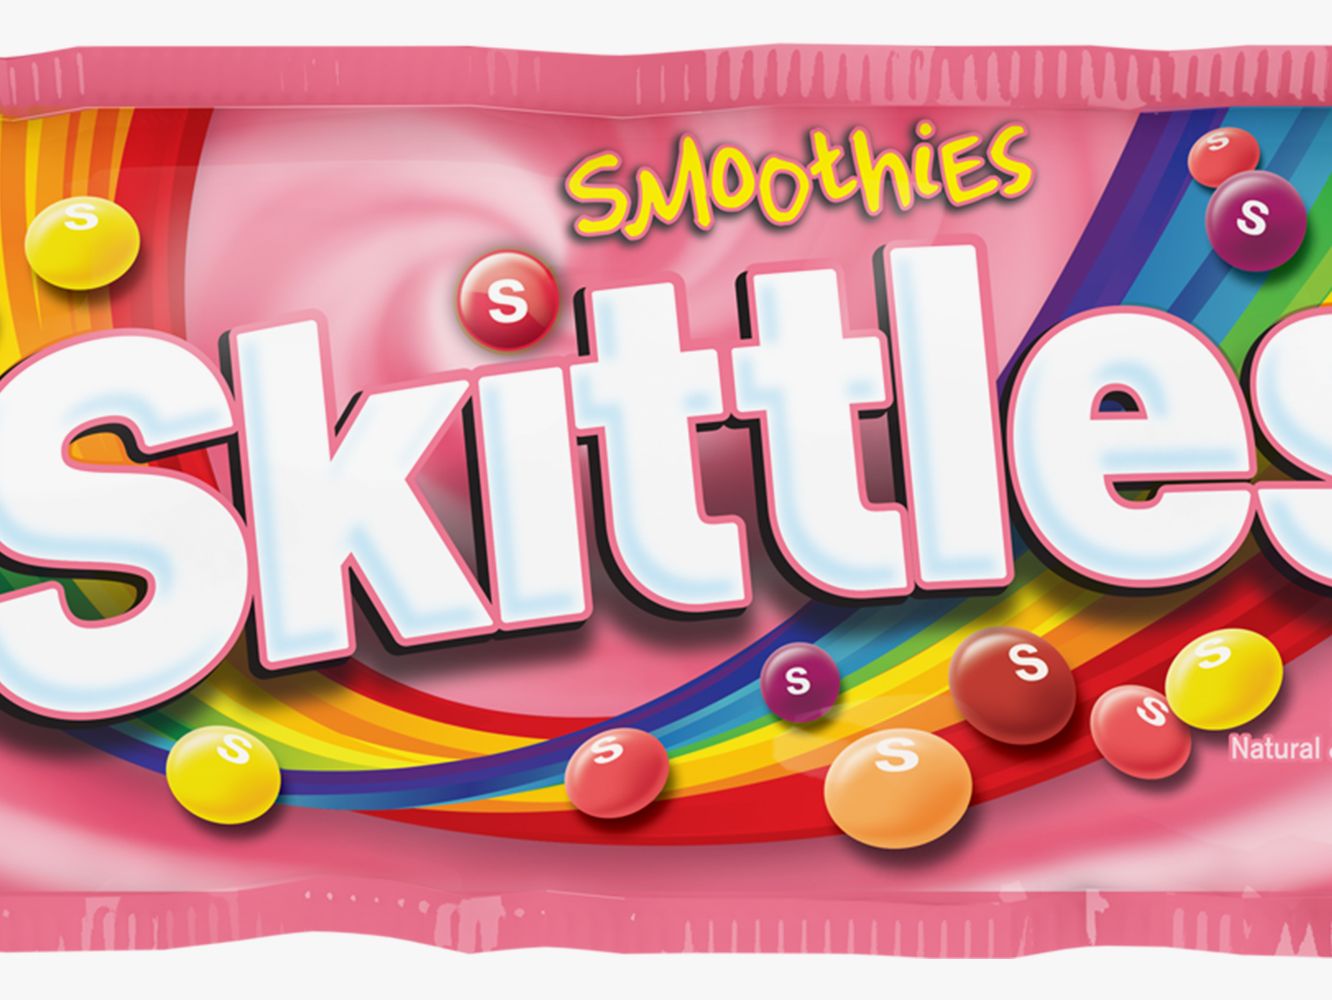 skittles smoothie mix